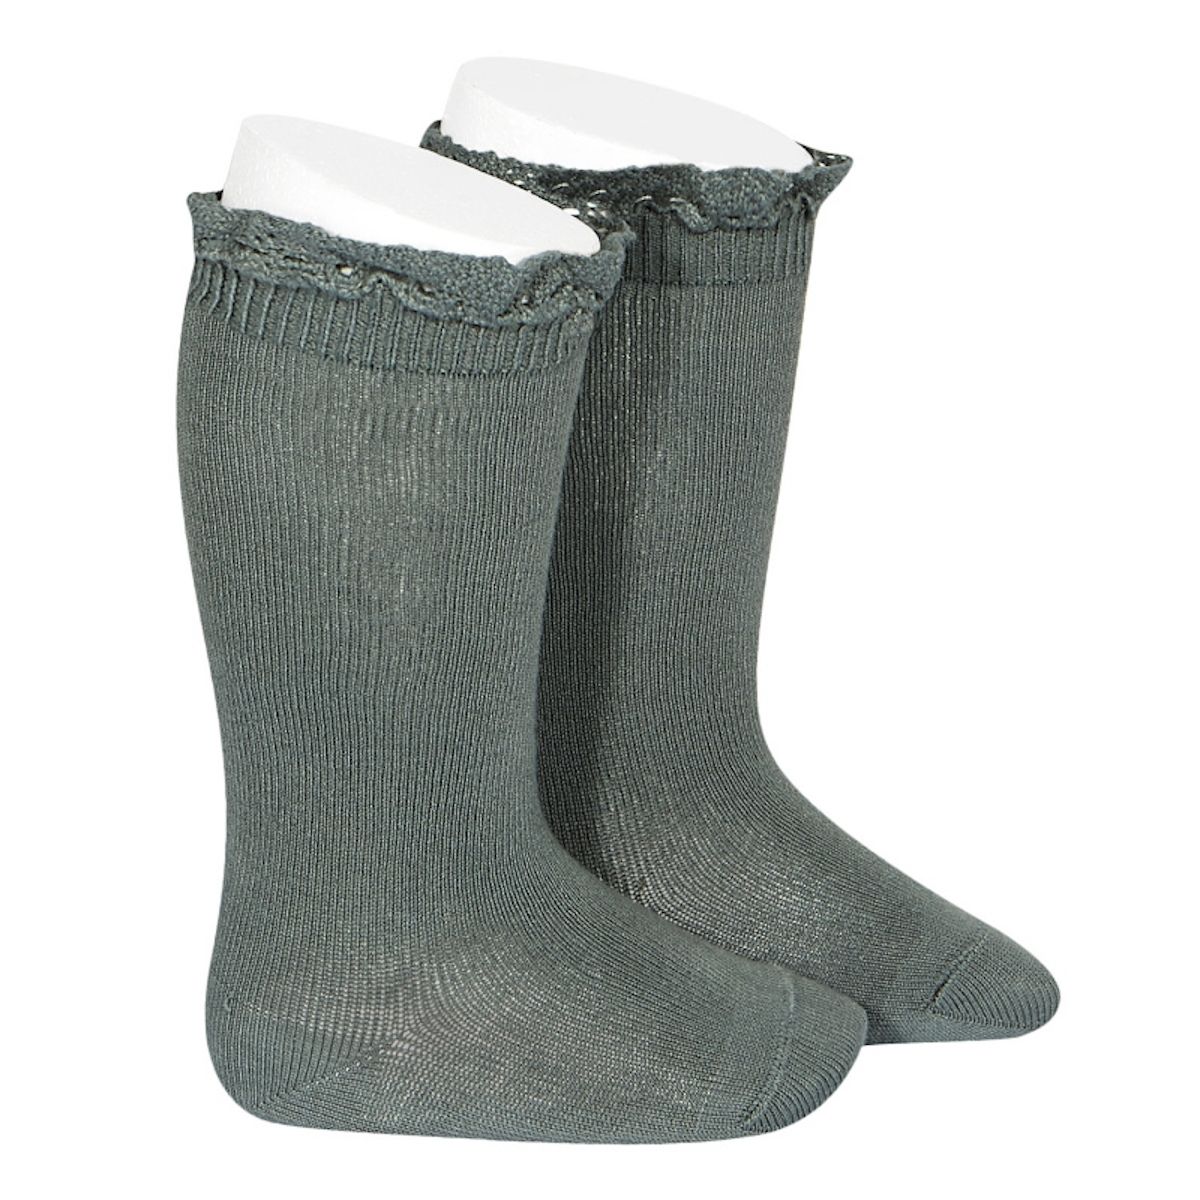 Condor Knee Socks With Lace lichen green 2.